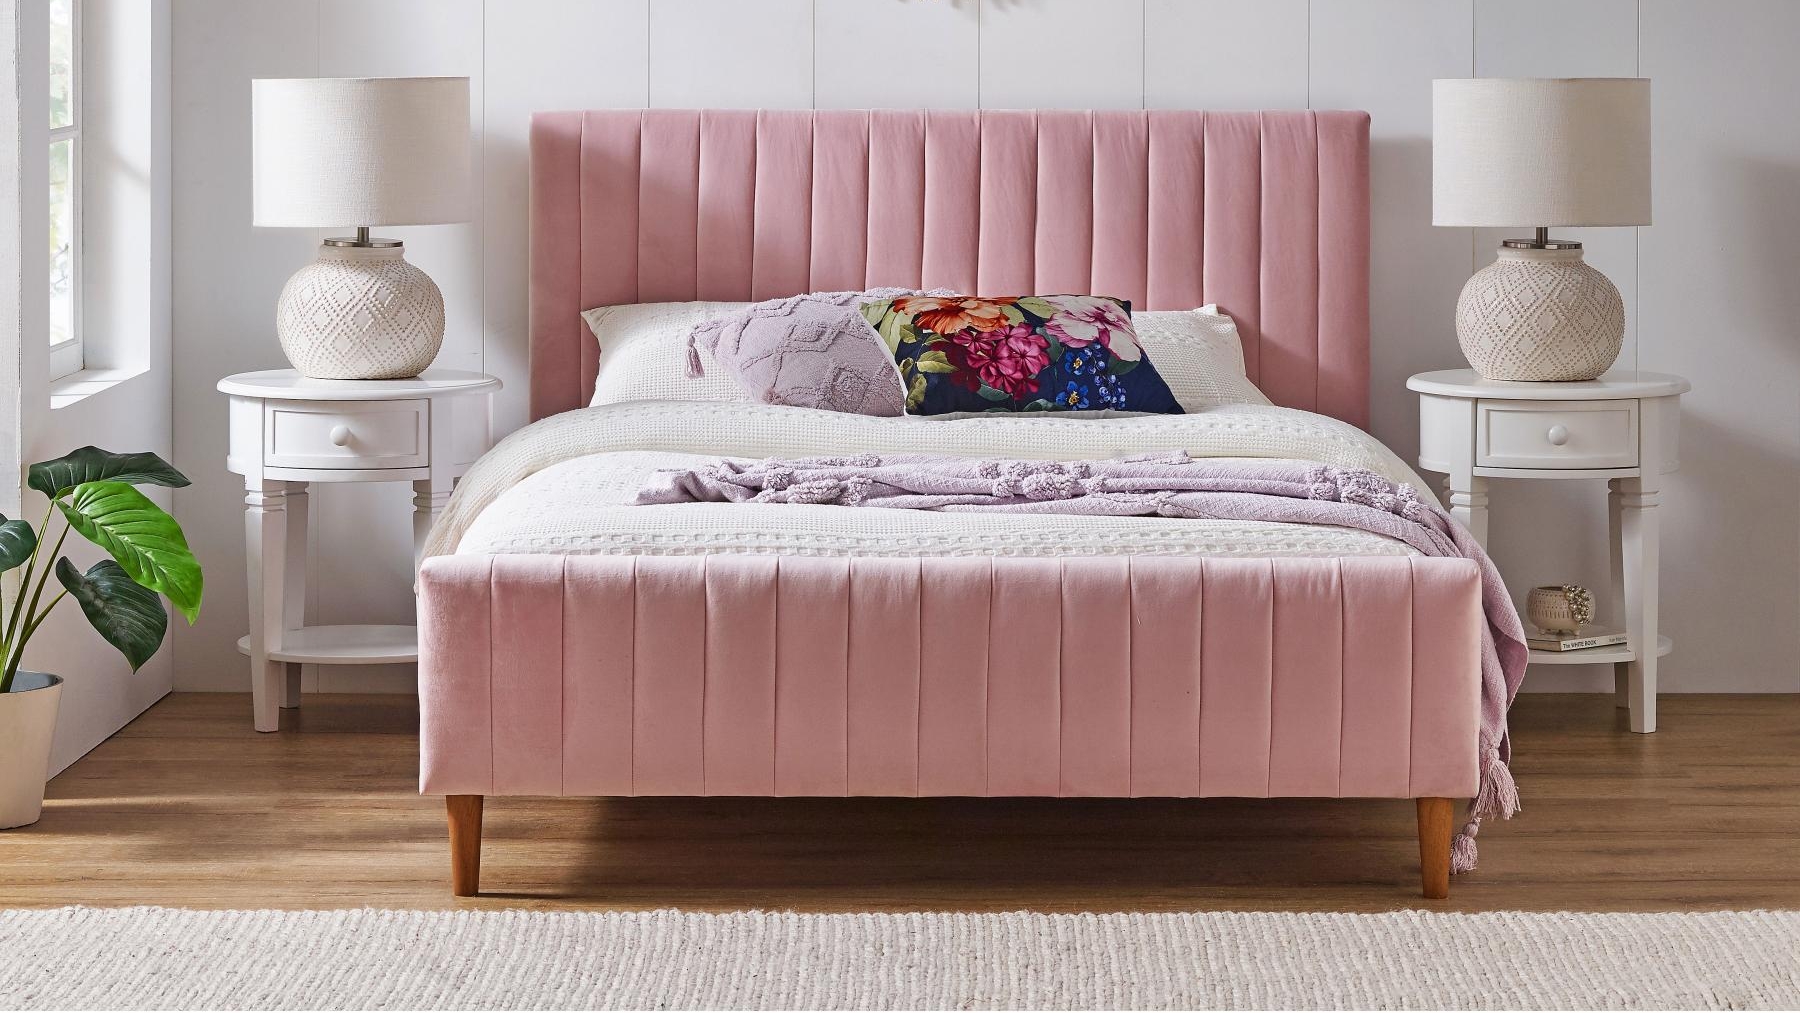 Pink Bed Frame Australia Choose From Big Brands Including Luxo Furniture Luxdream Priceworth